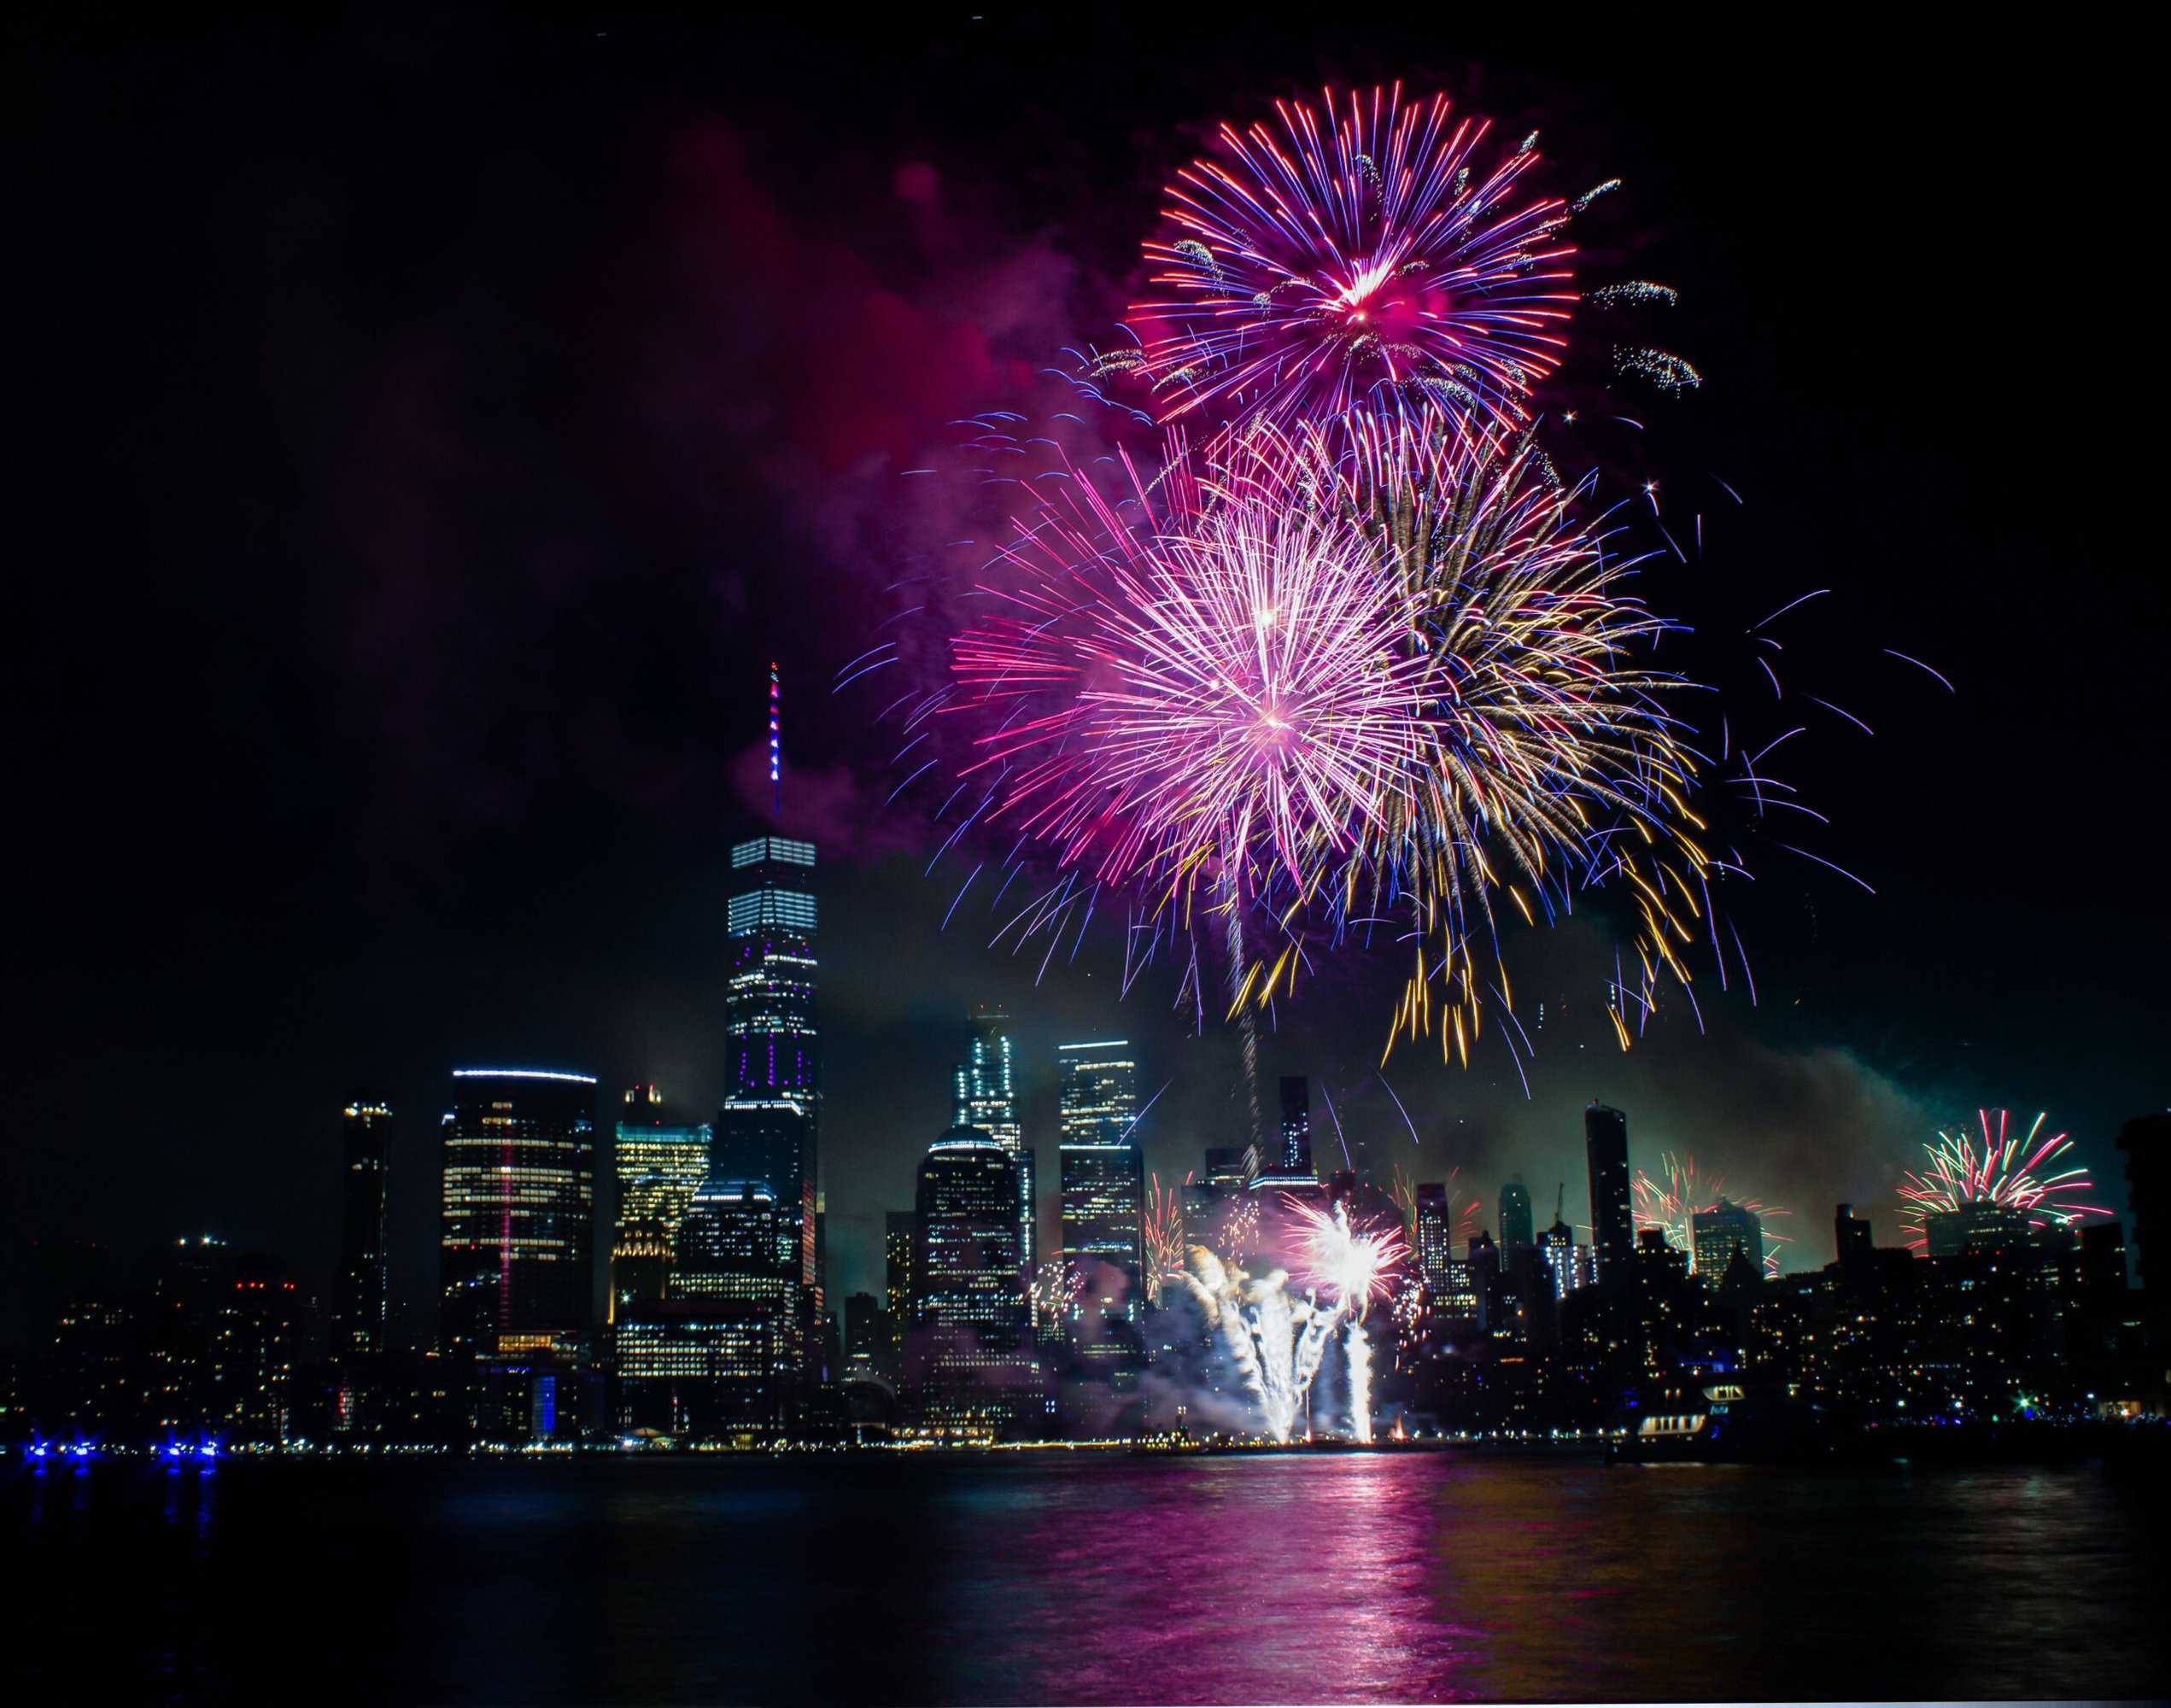 Fireworks happening over the skyline of New York City.